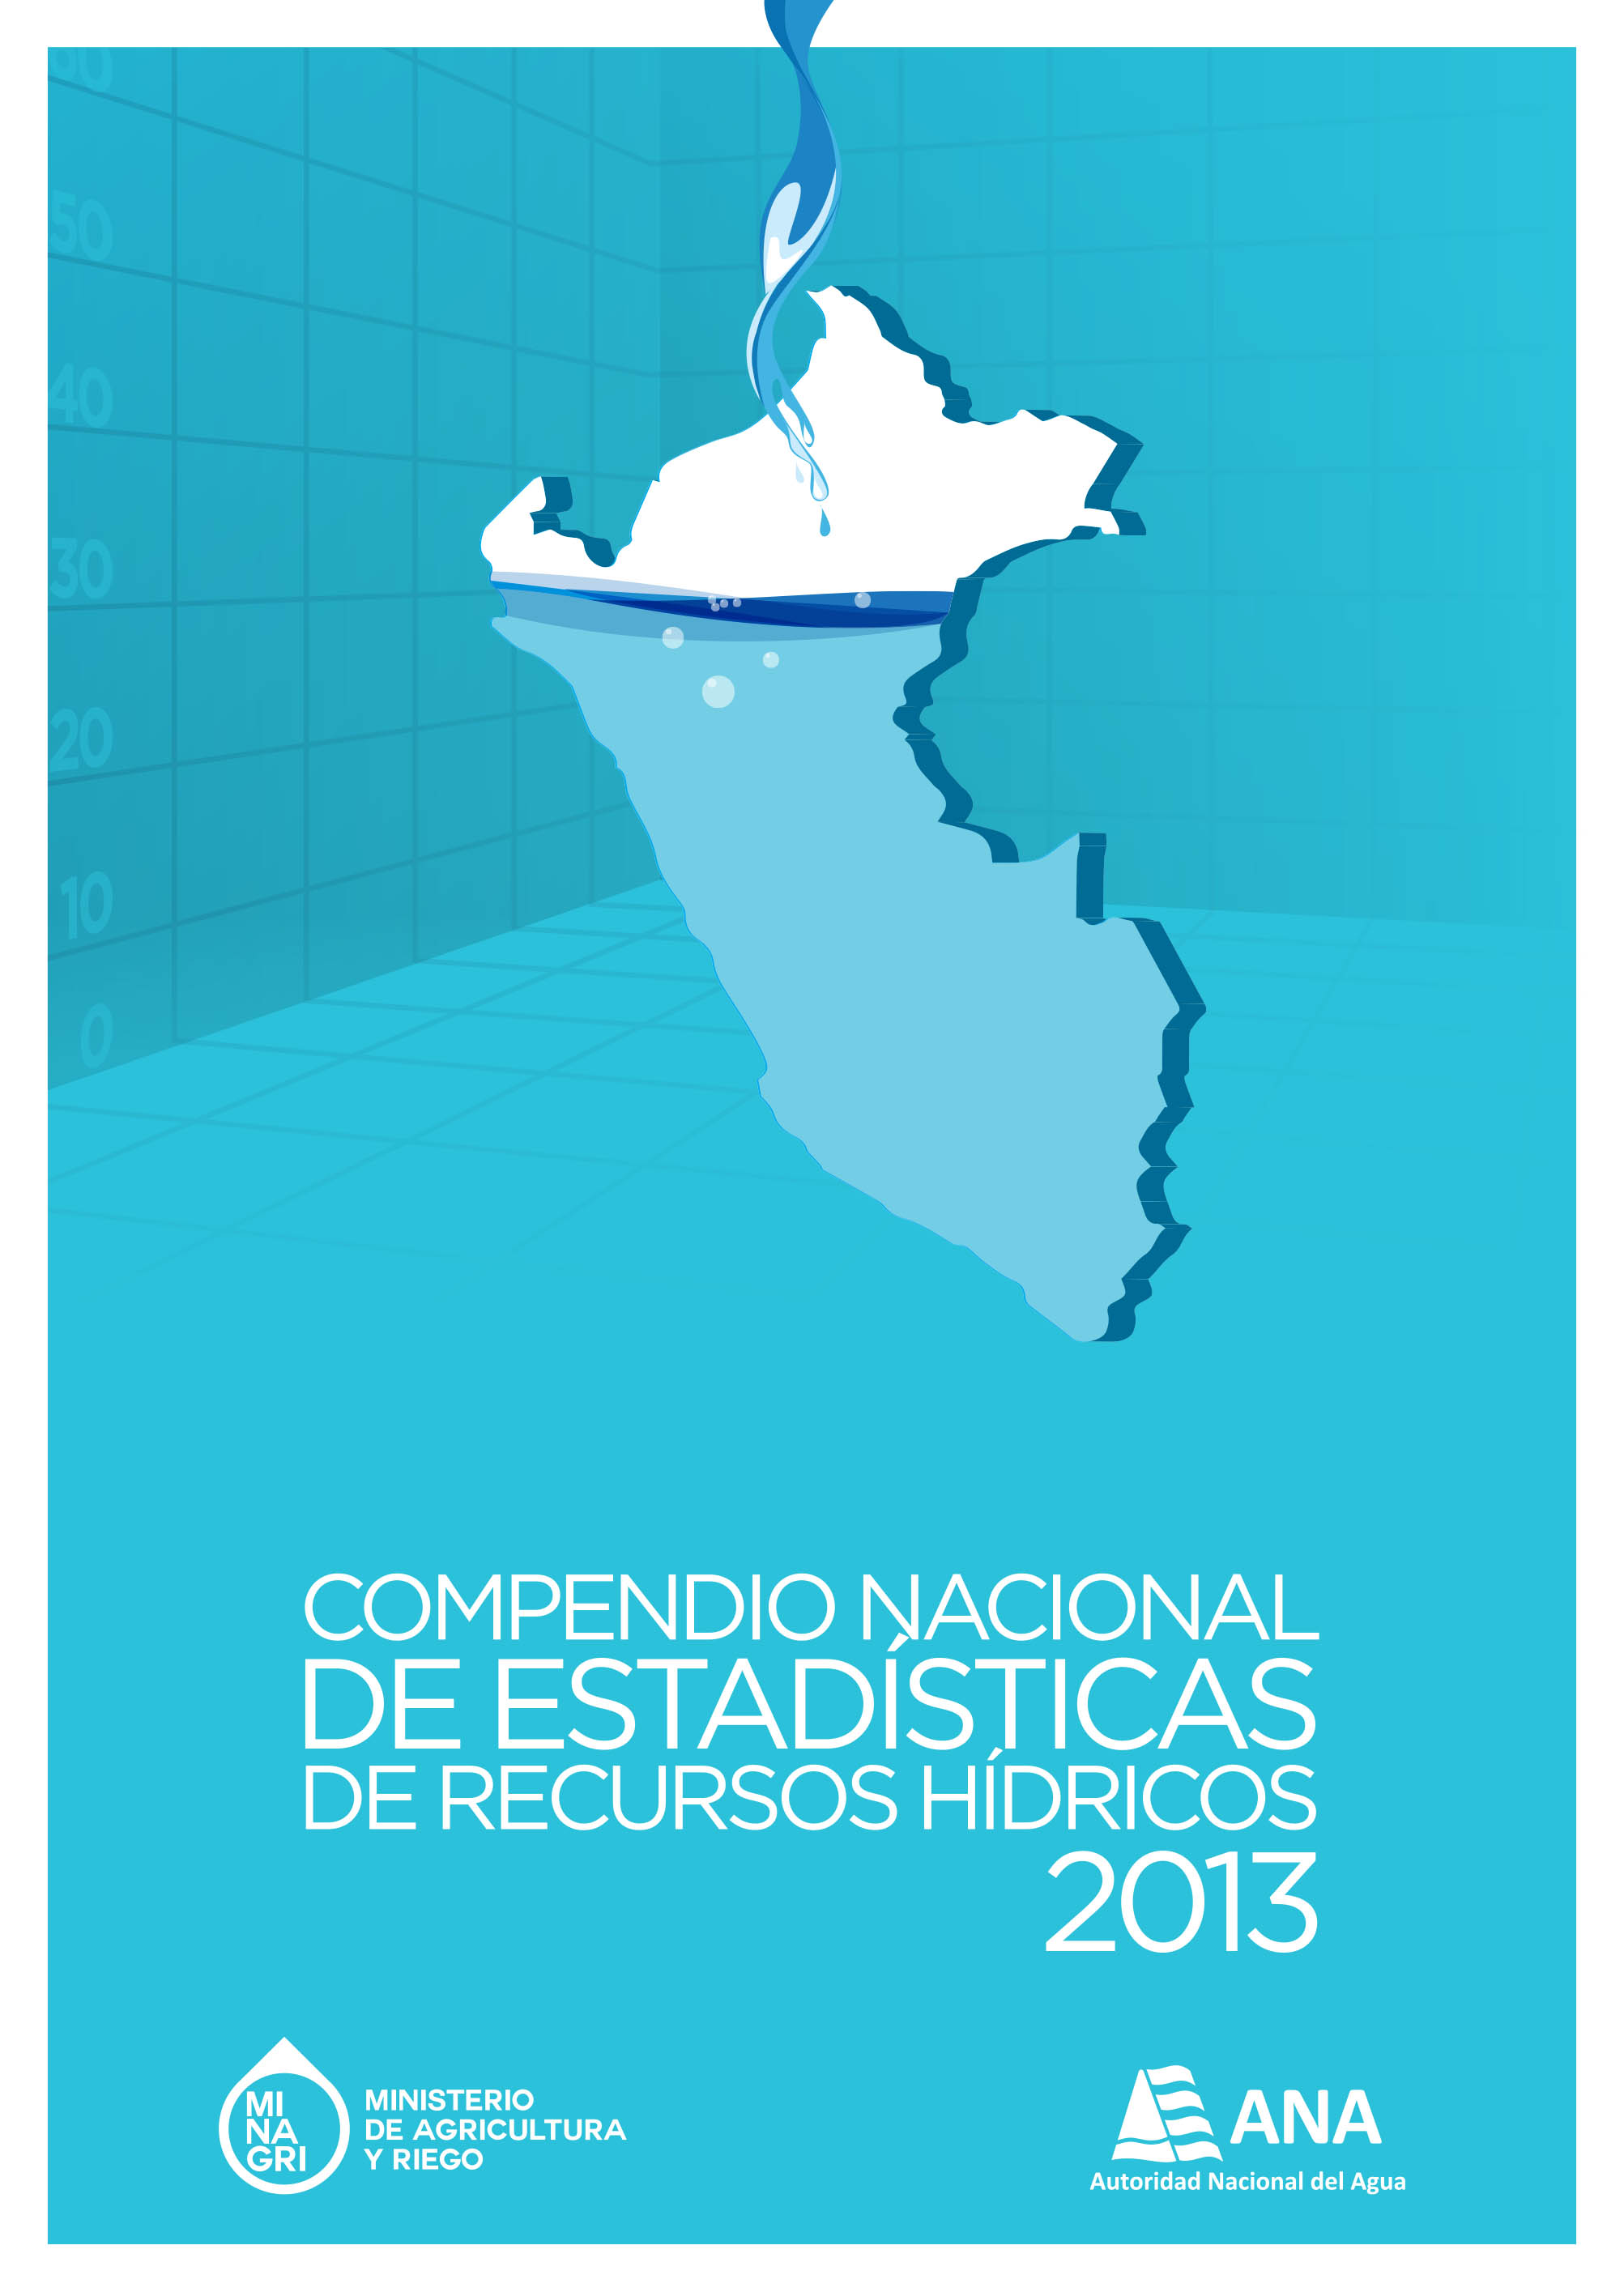 COMPENDIO NACIONAL ESTADISTICAS DE RECURSOS HÍDRICOS 2013